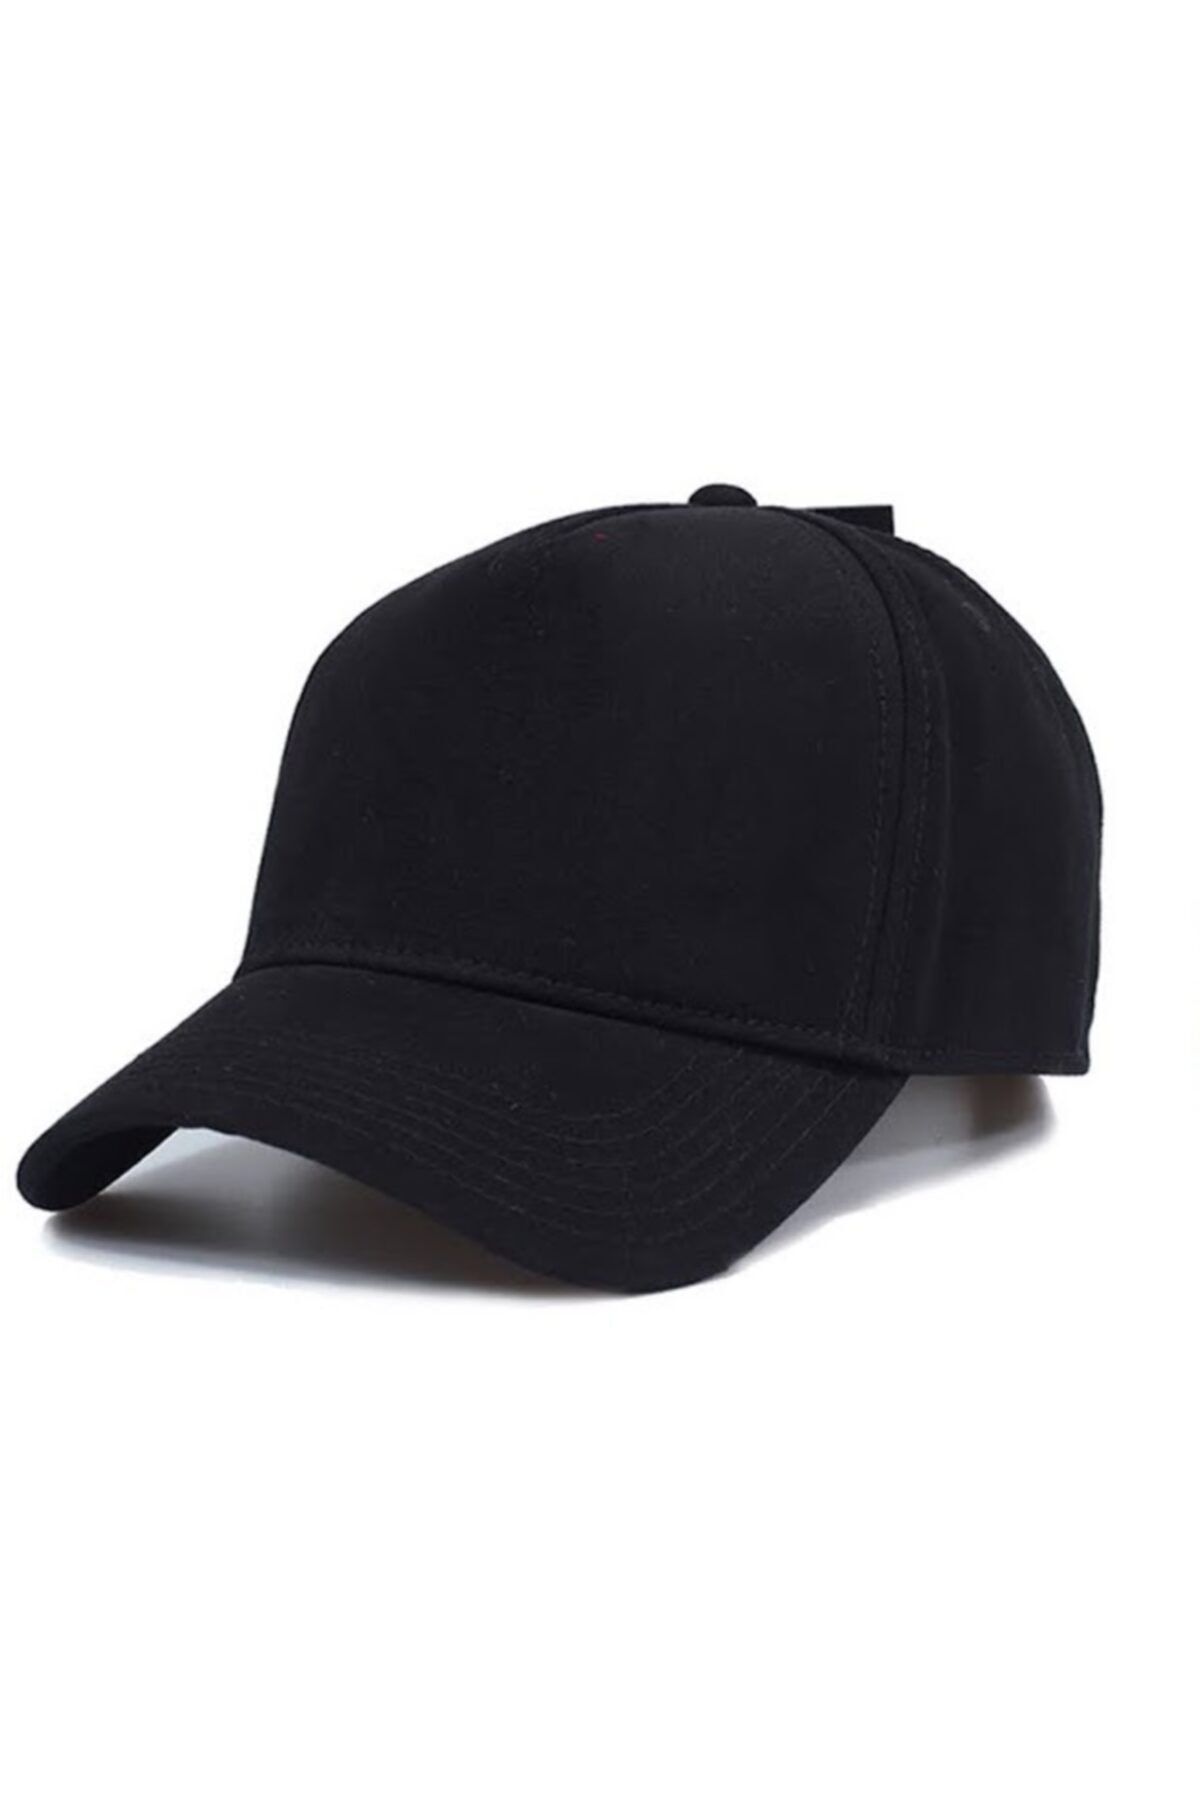 CosmoOutlet Düz Renk Basic Unisex Şapka [siyah]